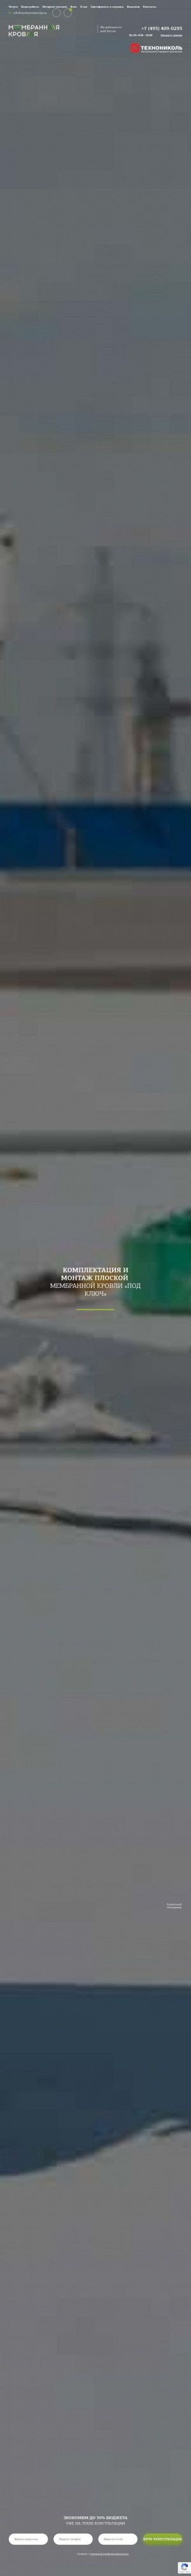 Предпросмотр для www.membranakrovlya.ru — Мембранная Кровля